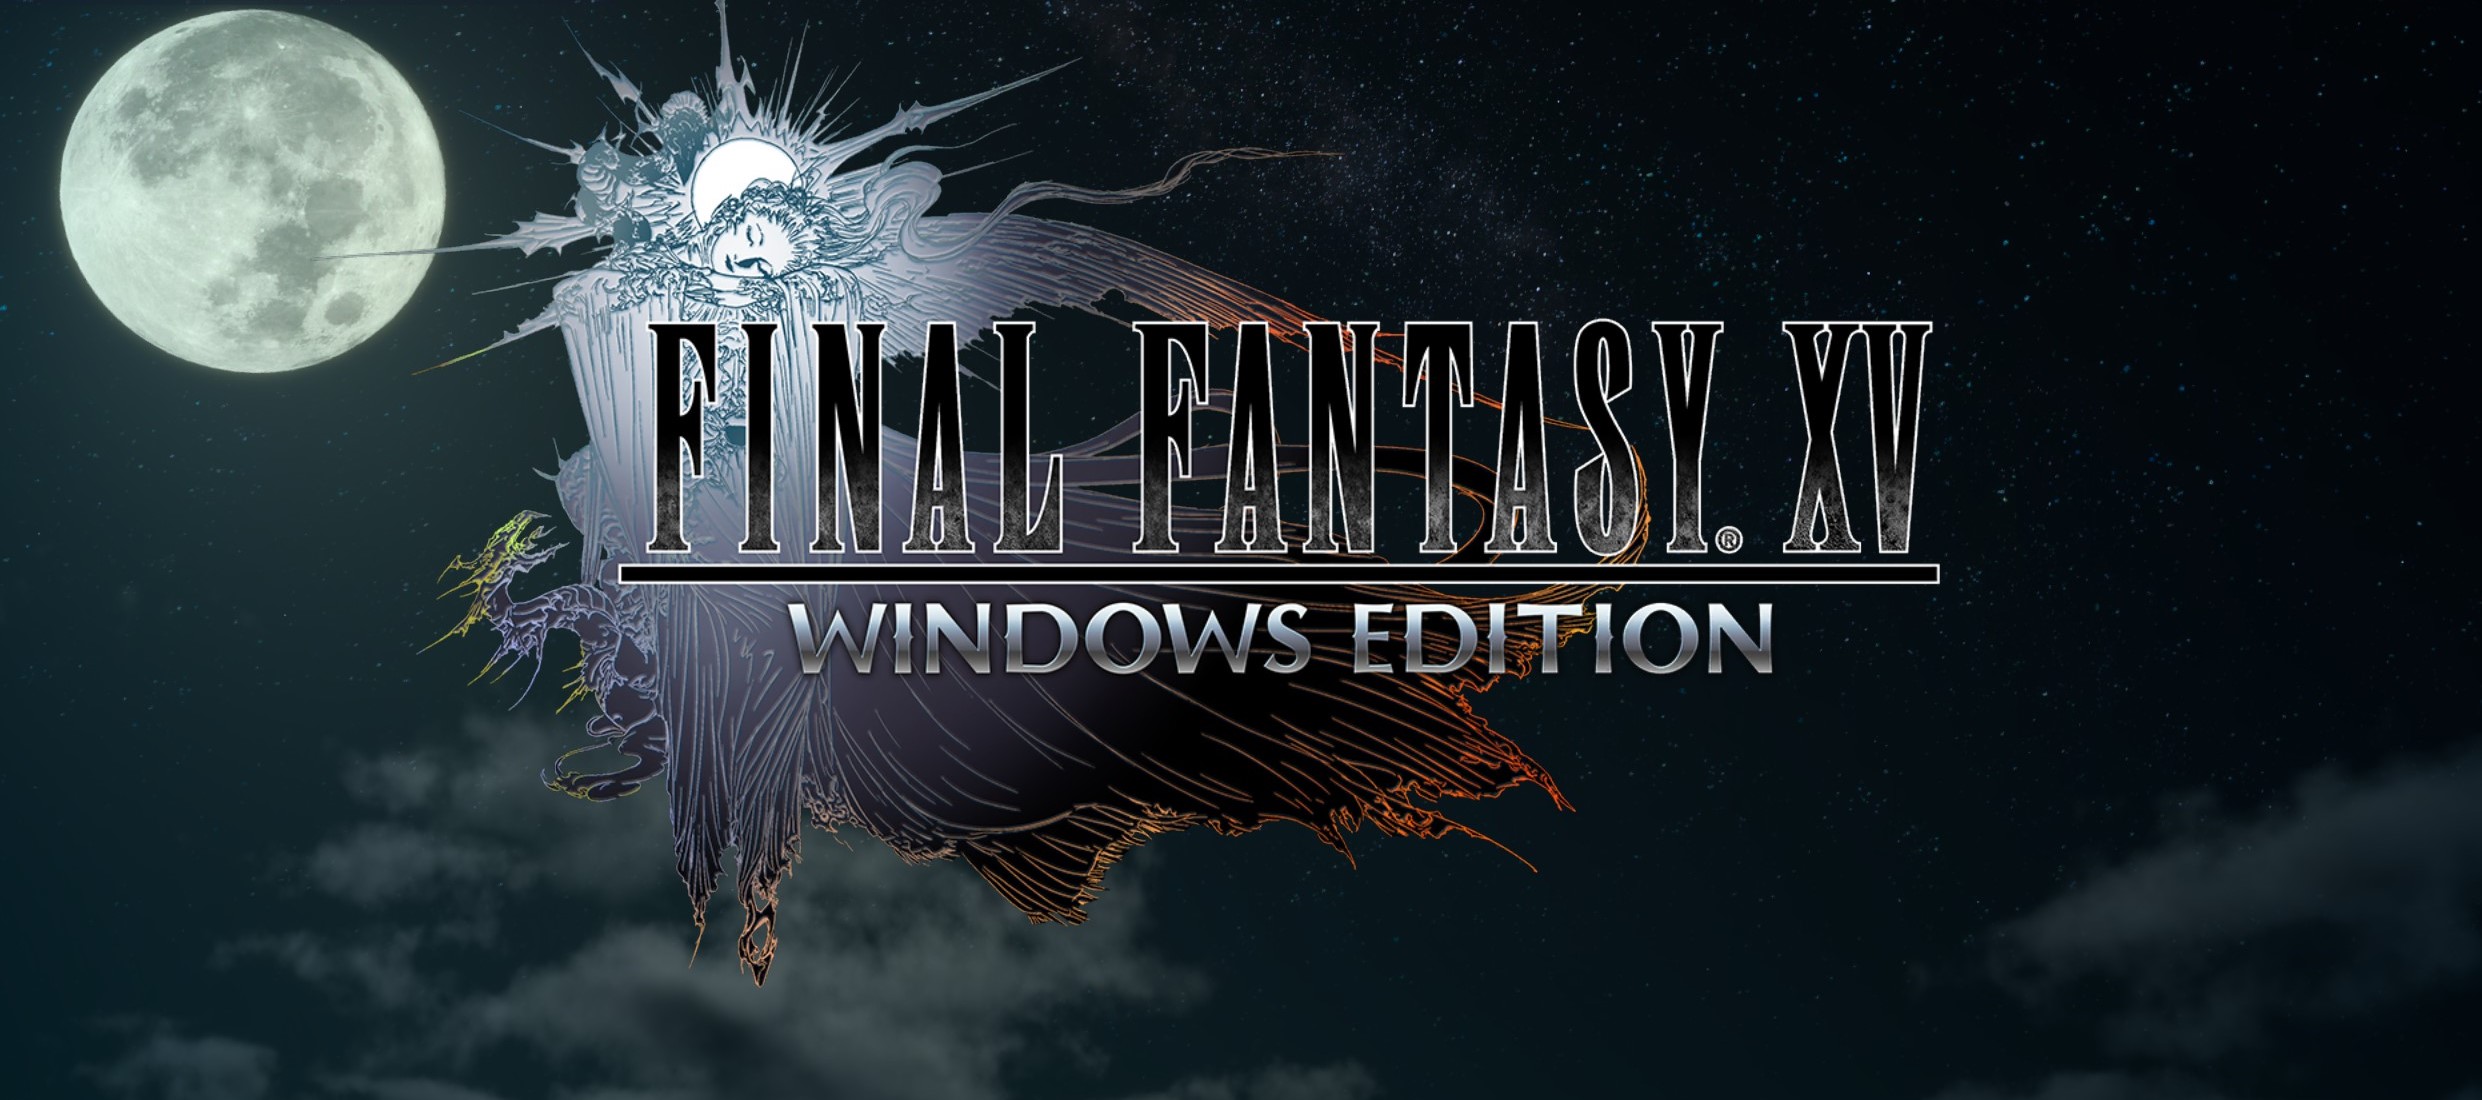 FINAL FANTASY XV WINDOWS EDITION Playable Demo for mac download free